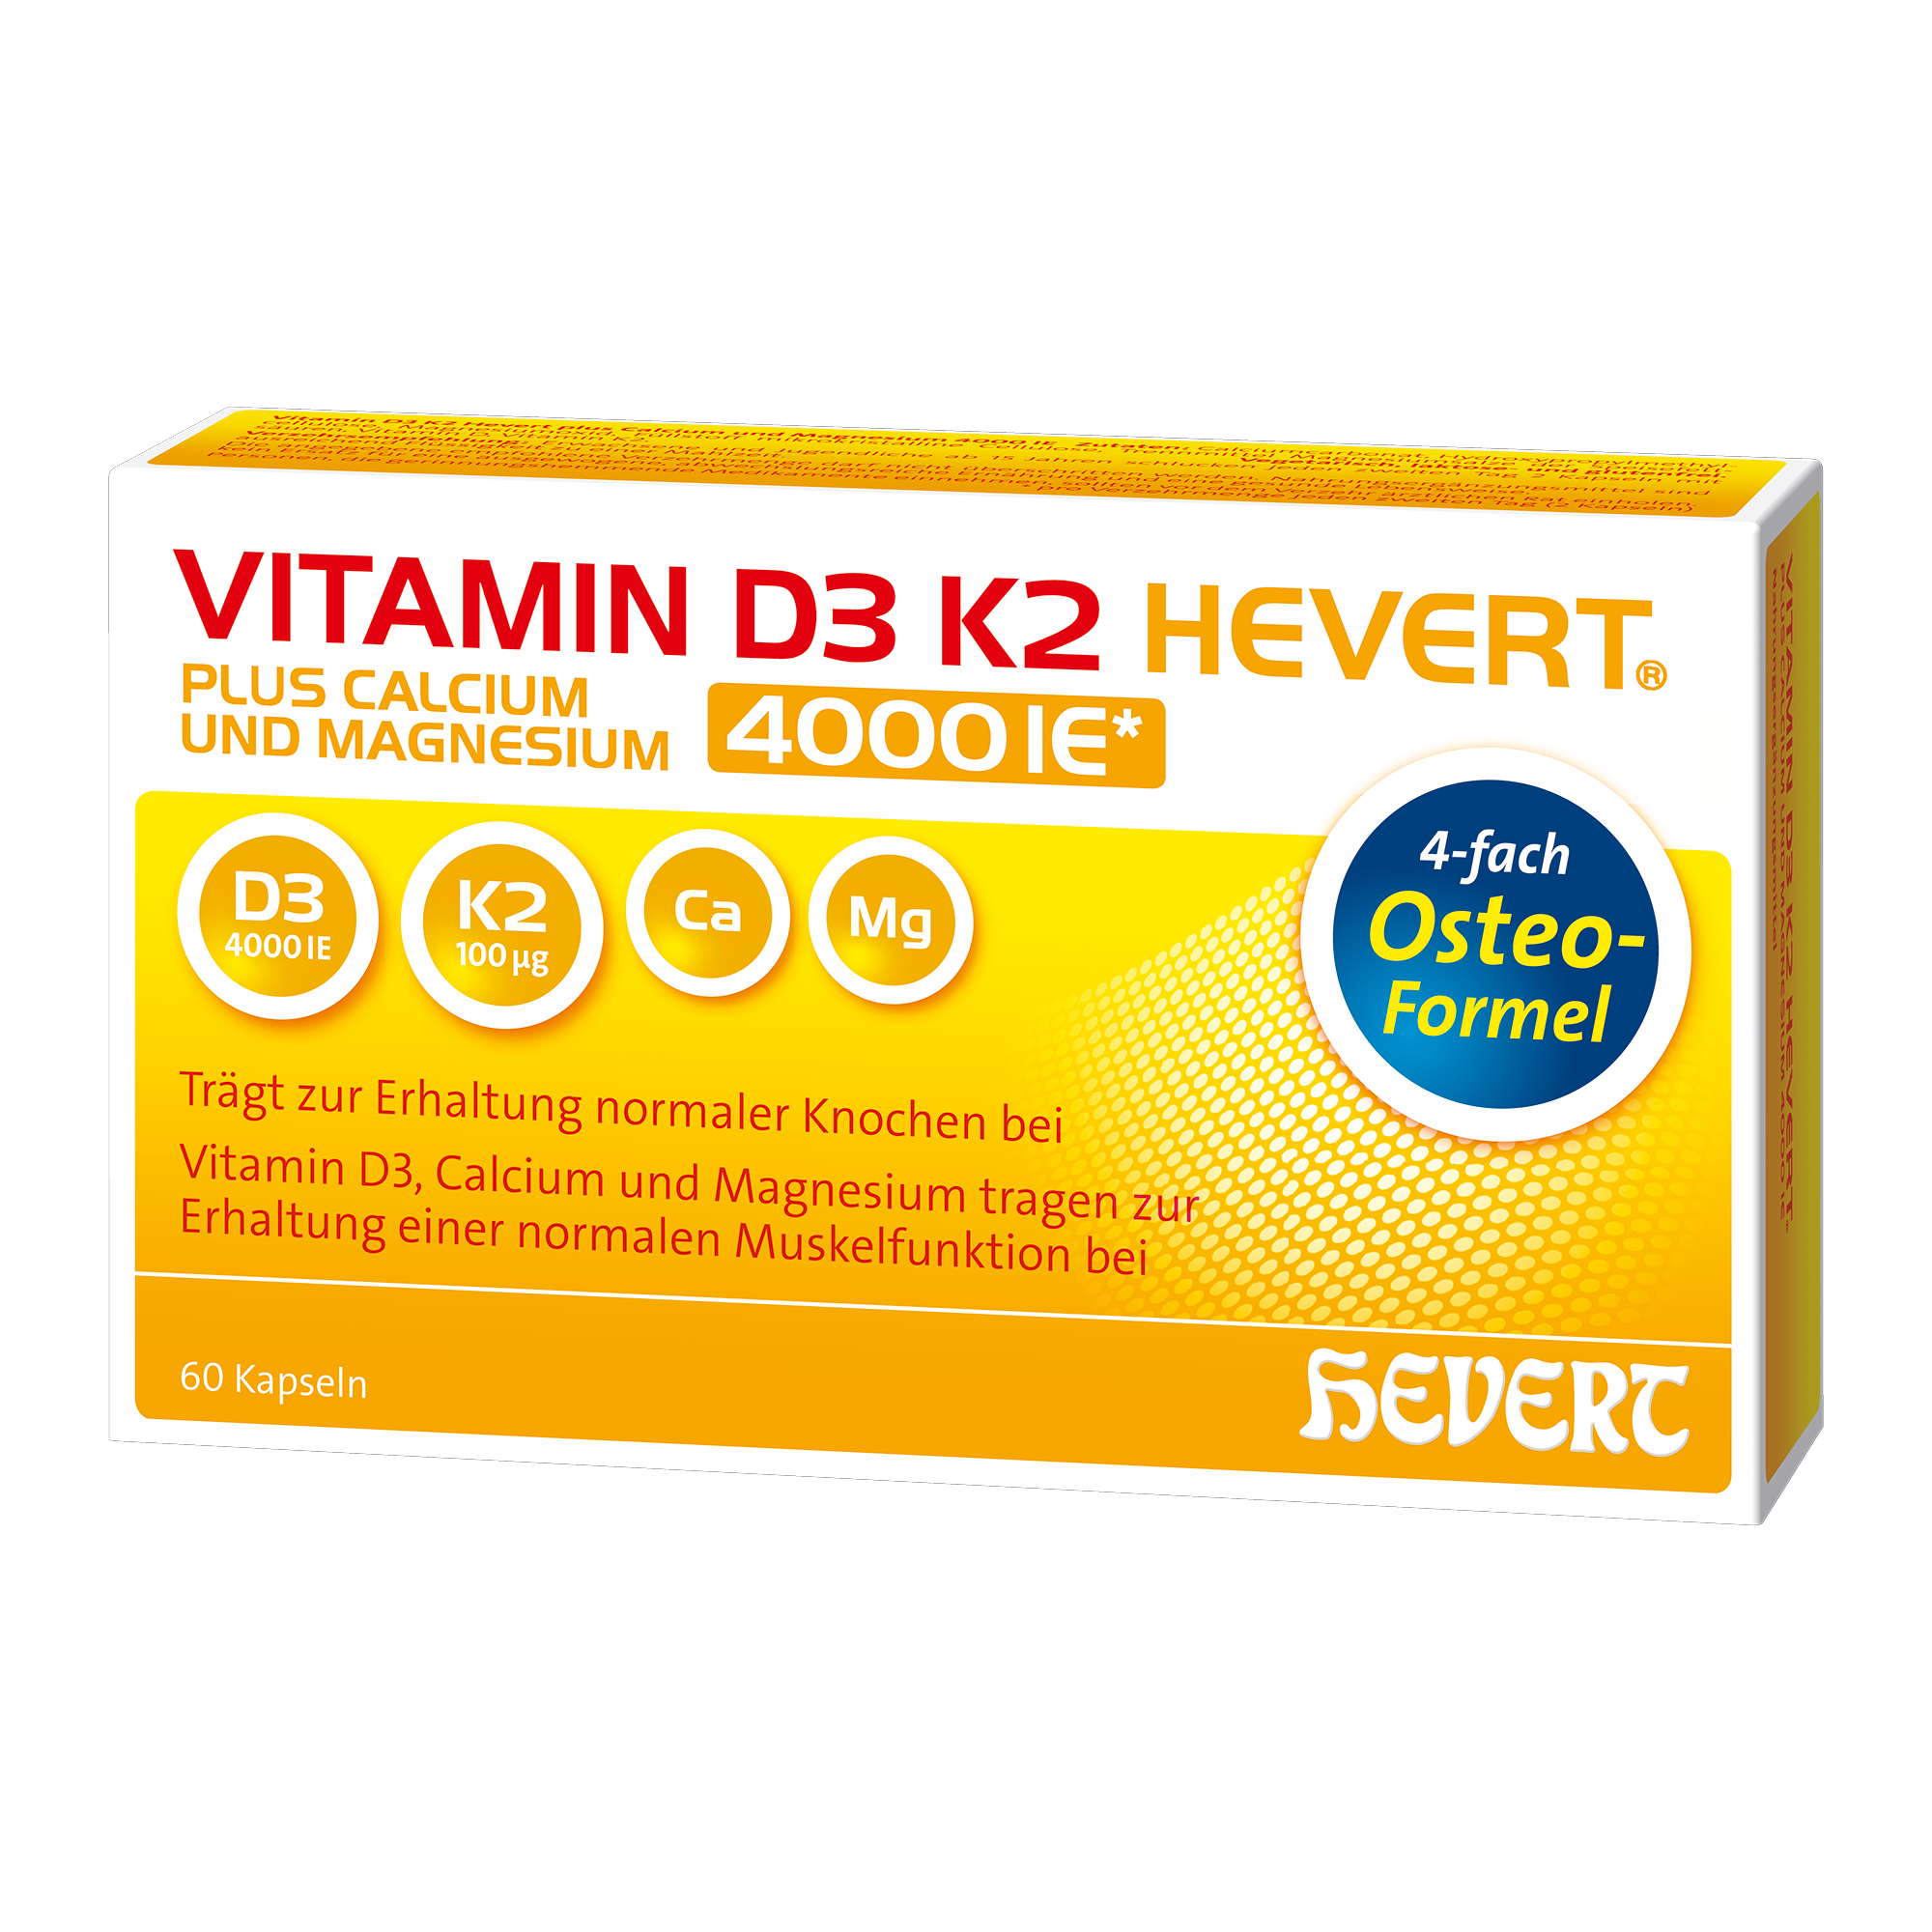 Vitamin D3 K2 Hevert plus Calcium und Magnesium 4000 IE, 60 St. Kapseln Hevert-Testen